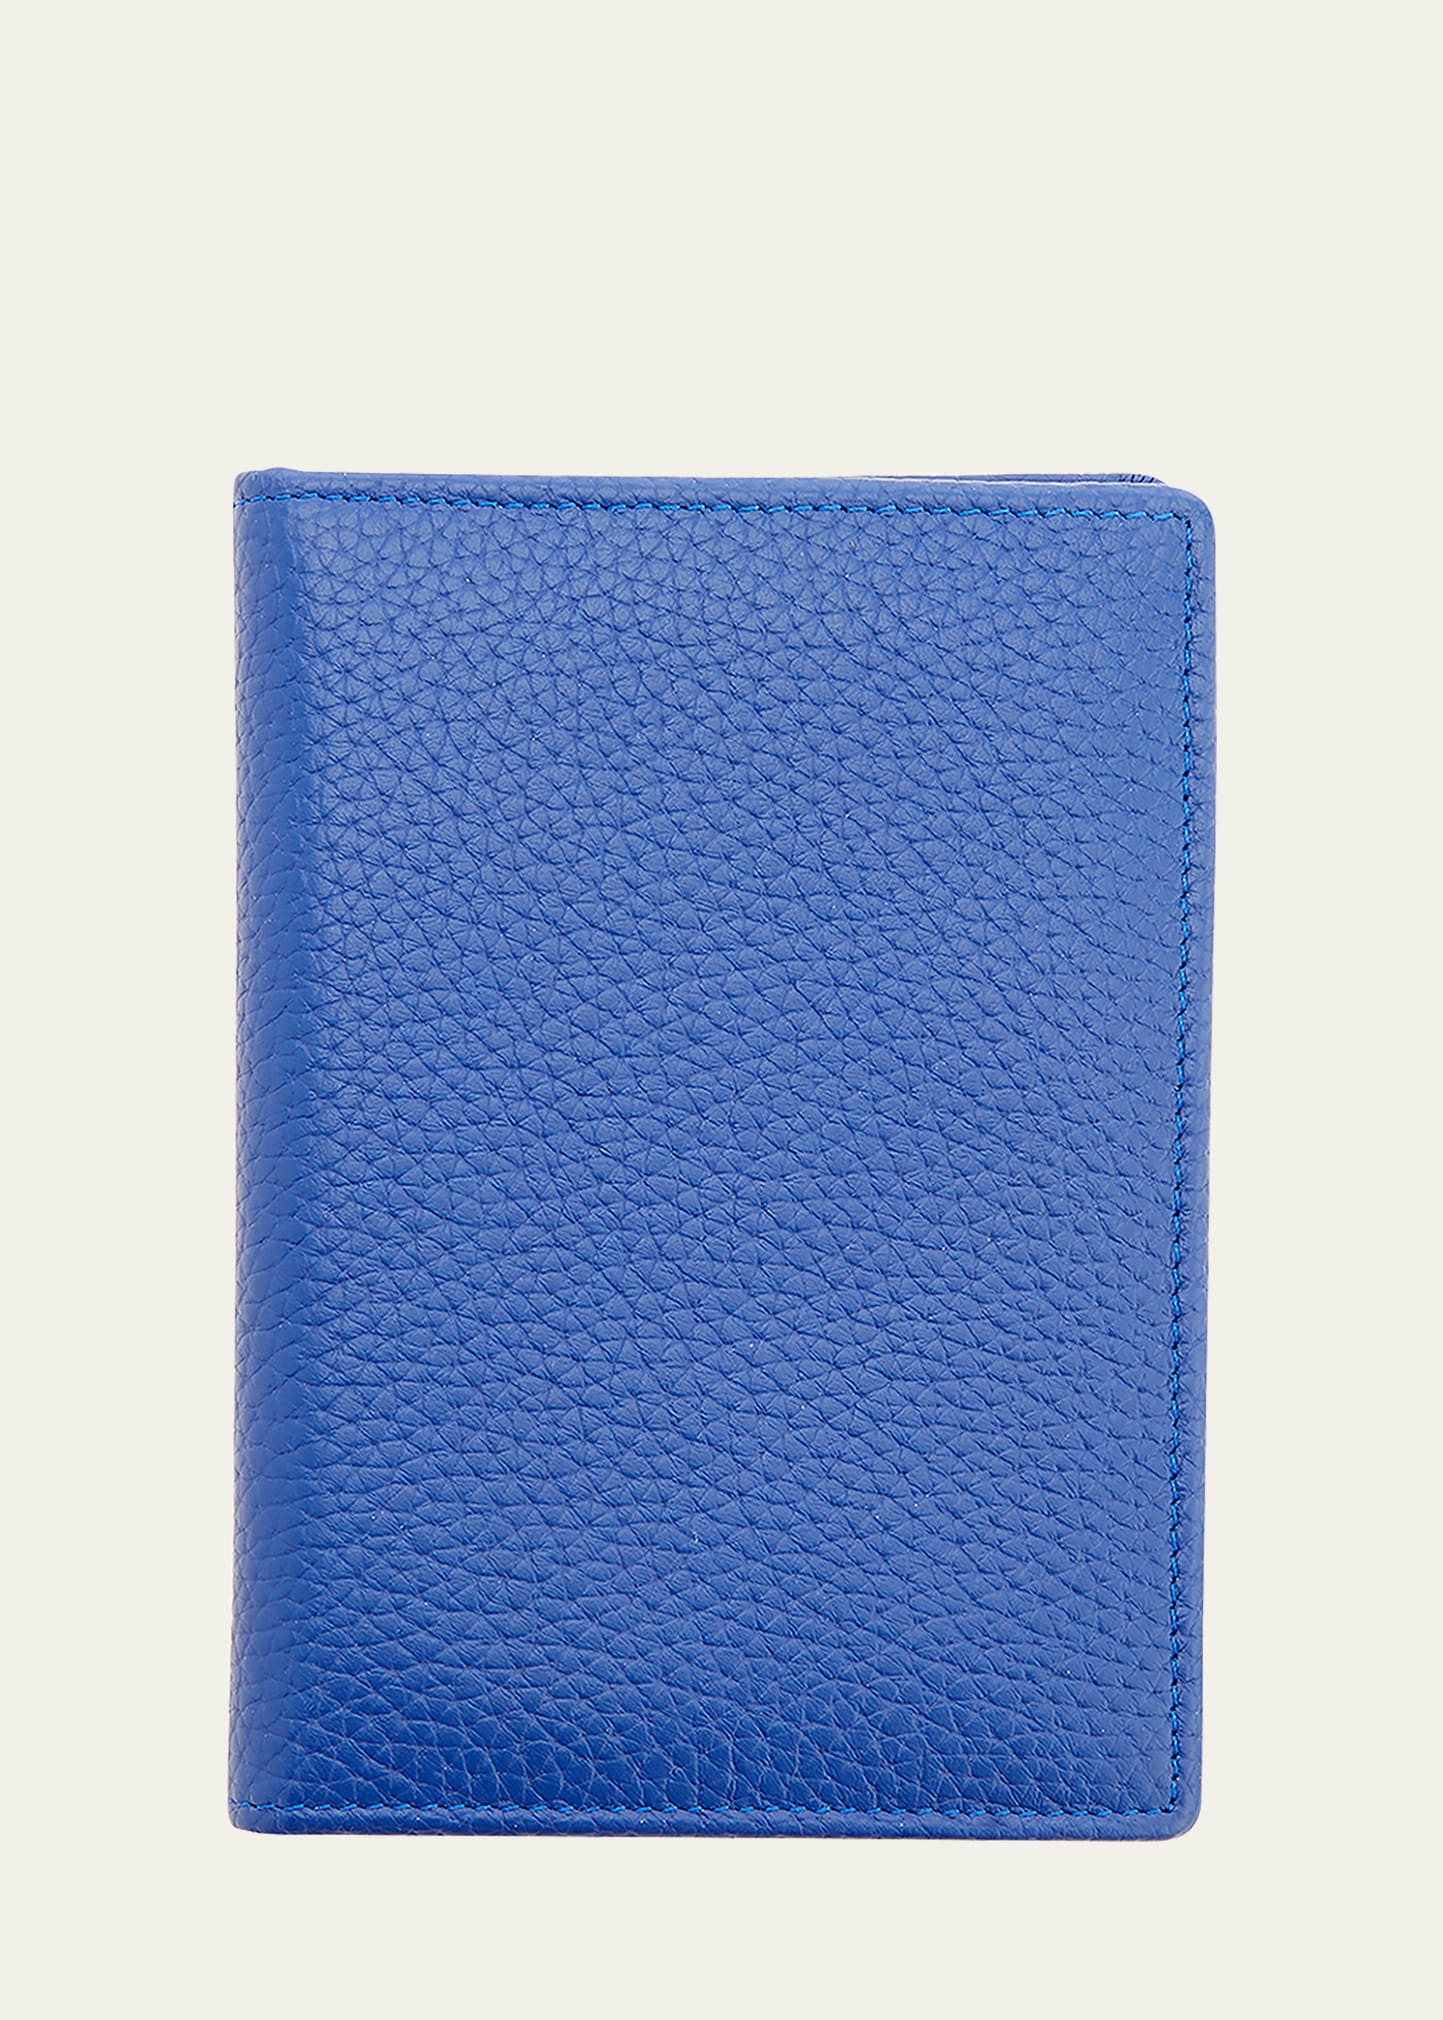 Personalized Leather RFID-Blocking Passport Case